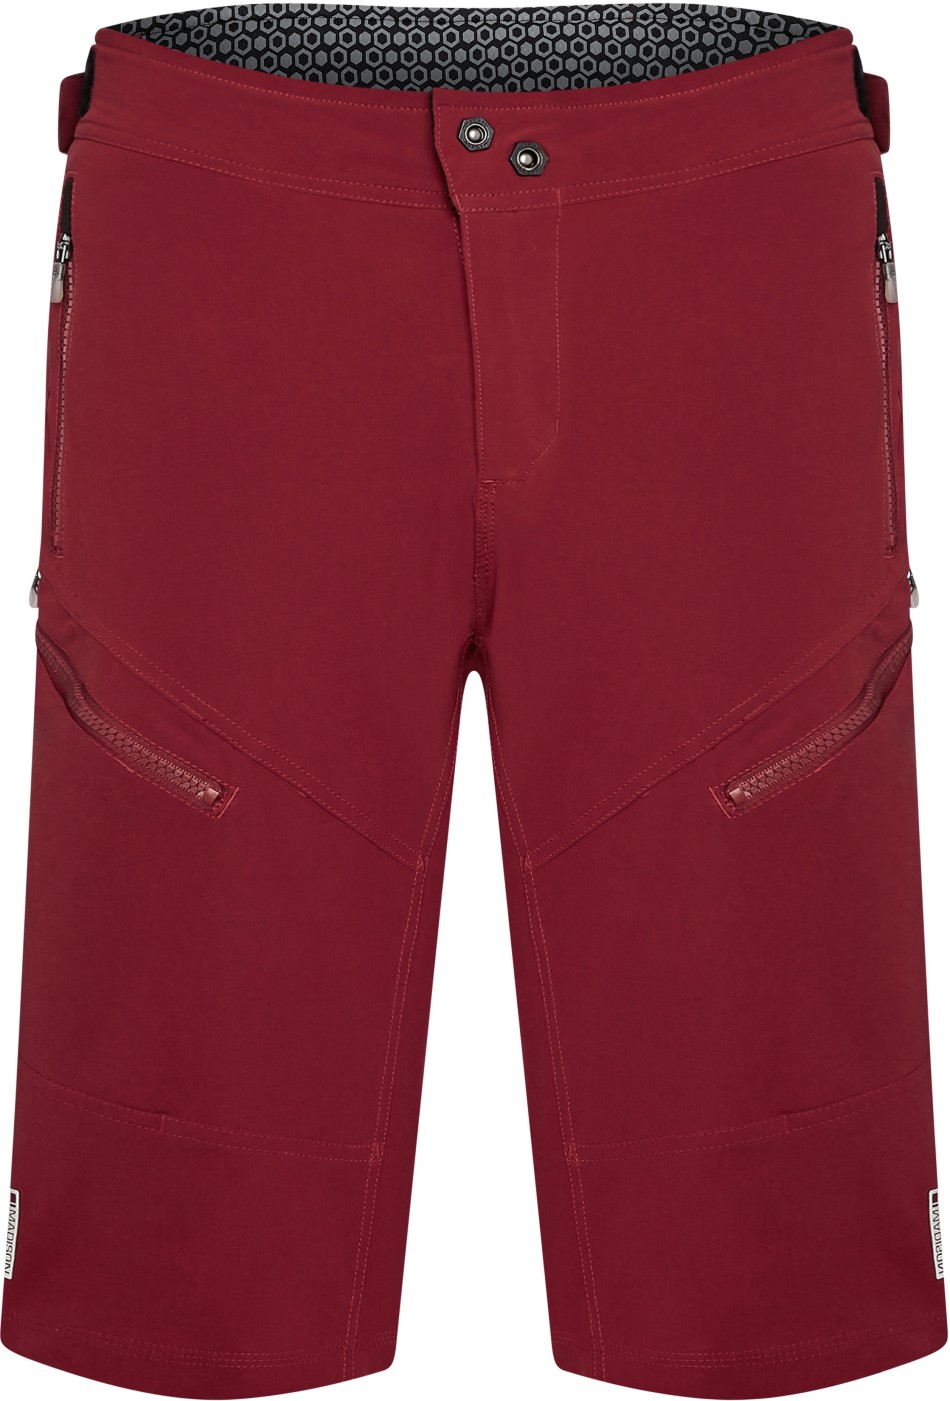 Madison Zenith Men's Shorts Red